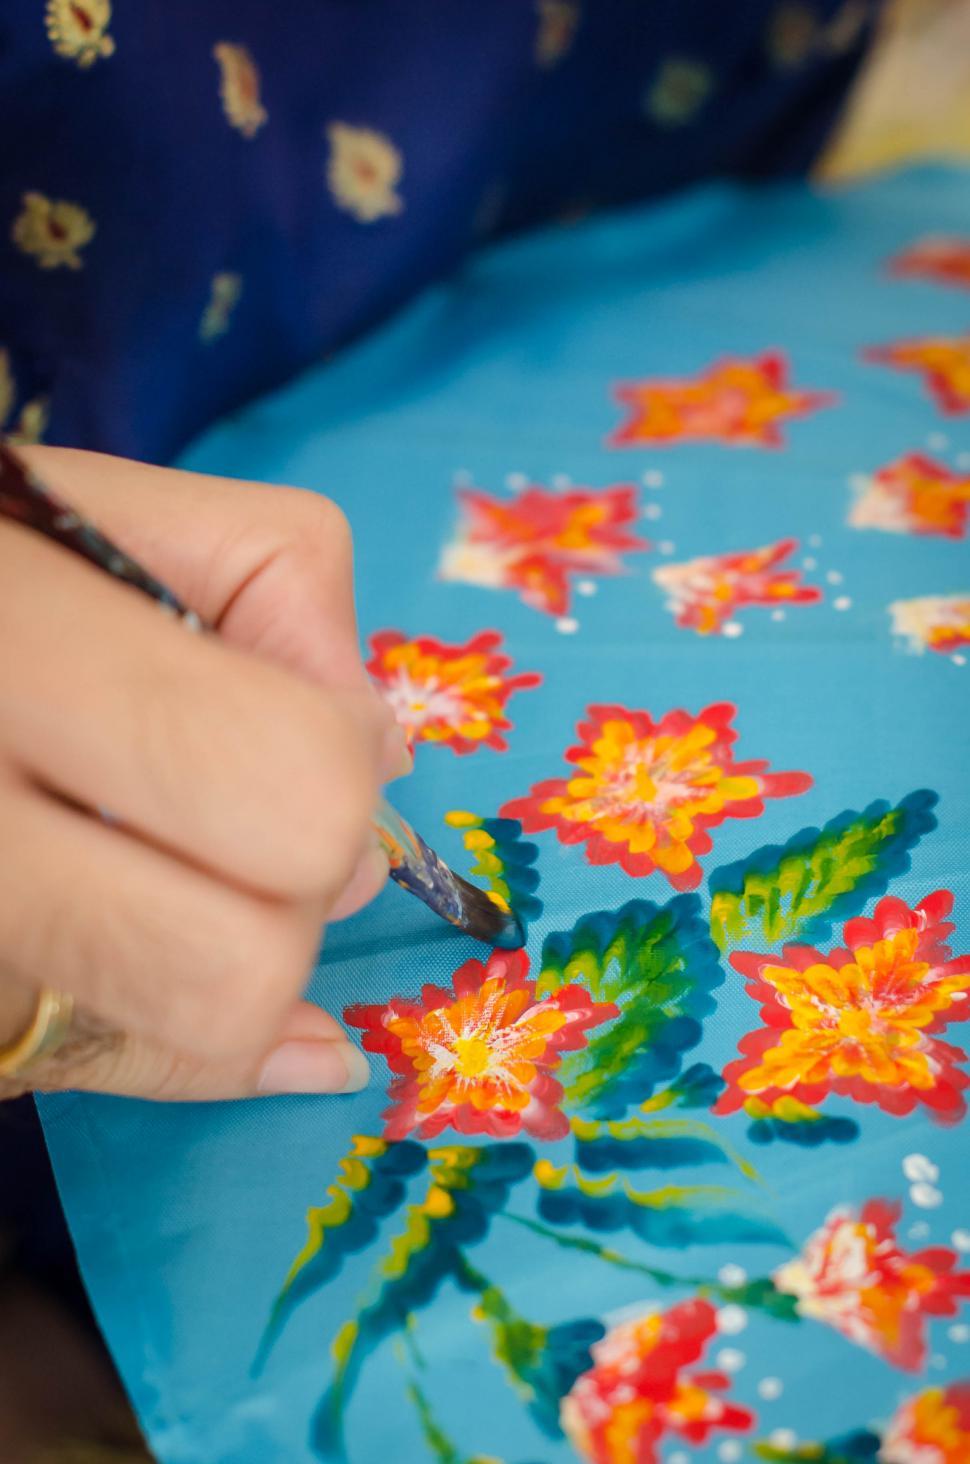 Free Image of Hand Painting Umbrella Pattern 